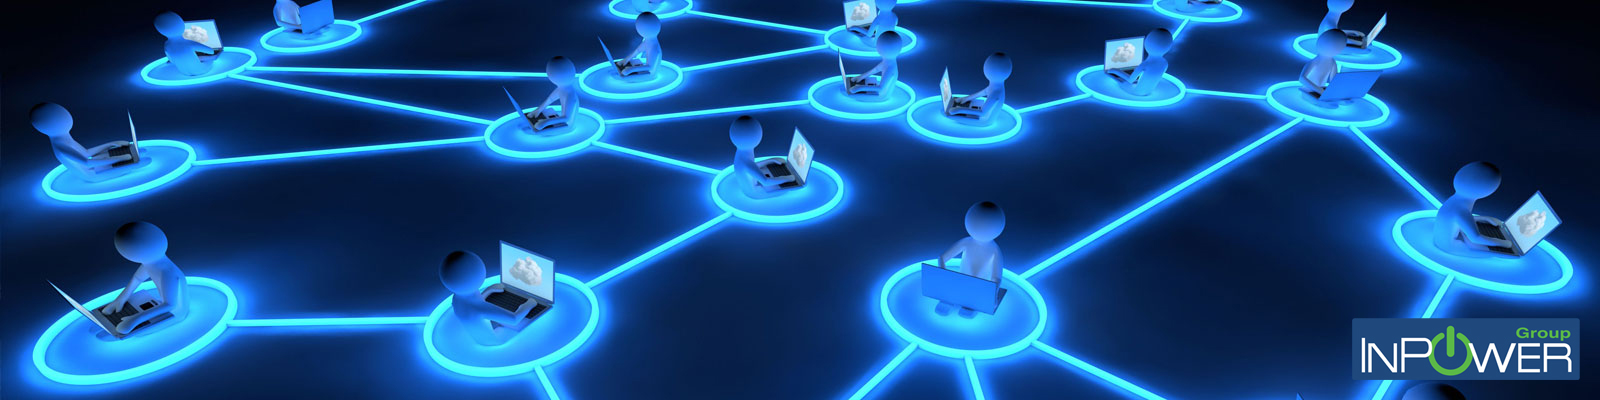 Progettazione infrastrutture ICT INPOWER-GROUP Networking reti wireless e telefonia IP  enti Sistemi networking strutturati Efficientamento 